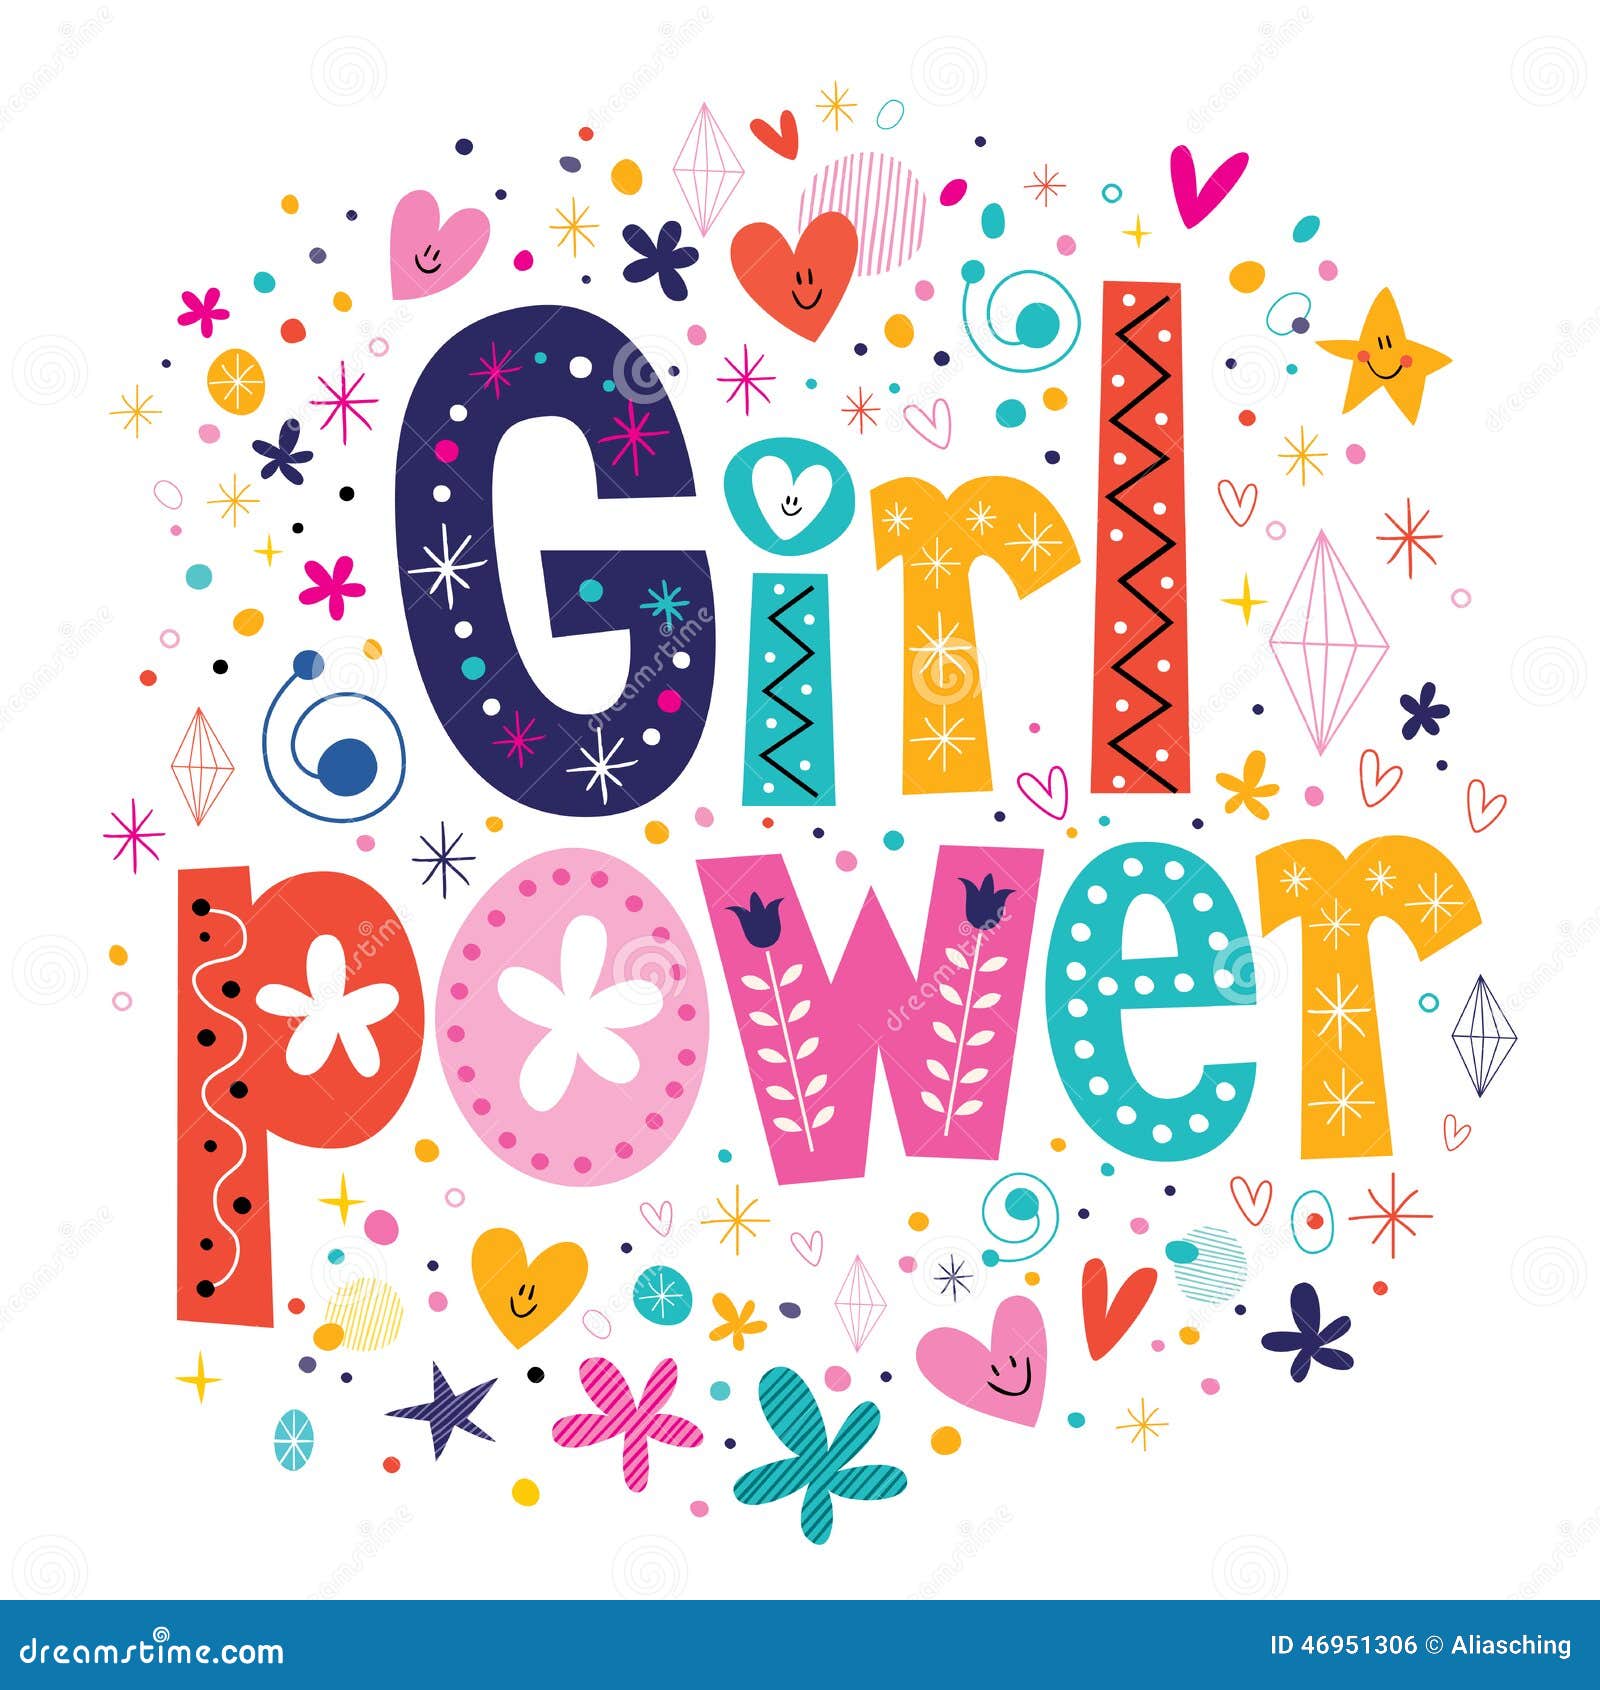 girl power clipart - photo #4